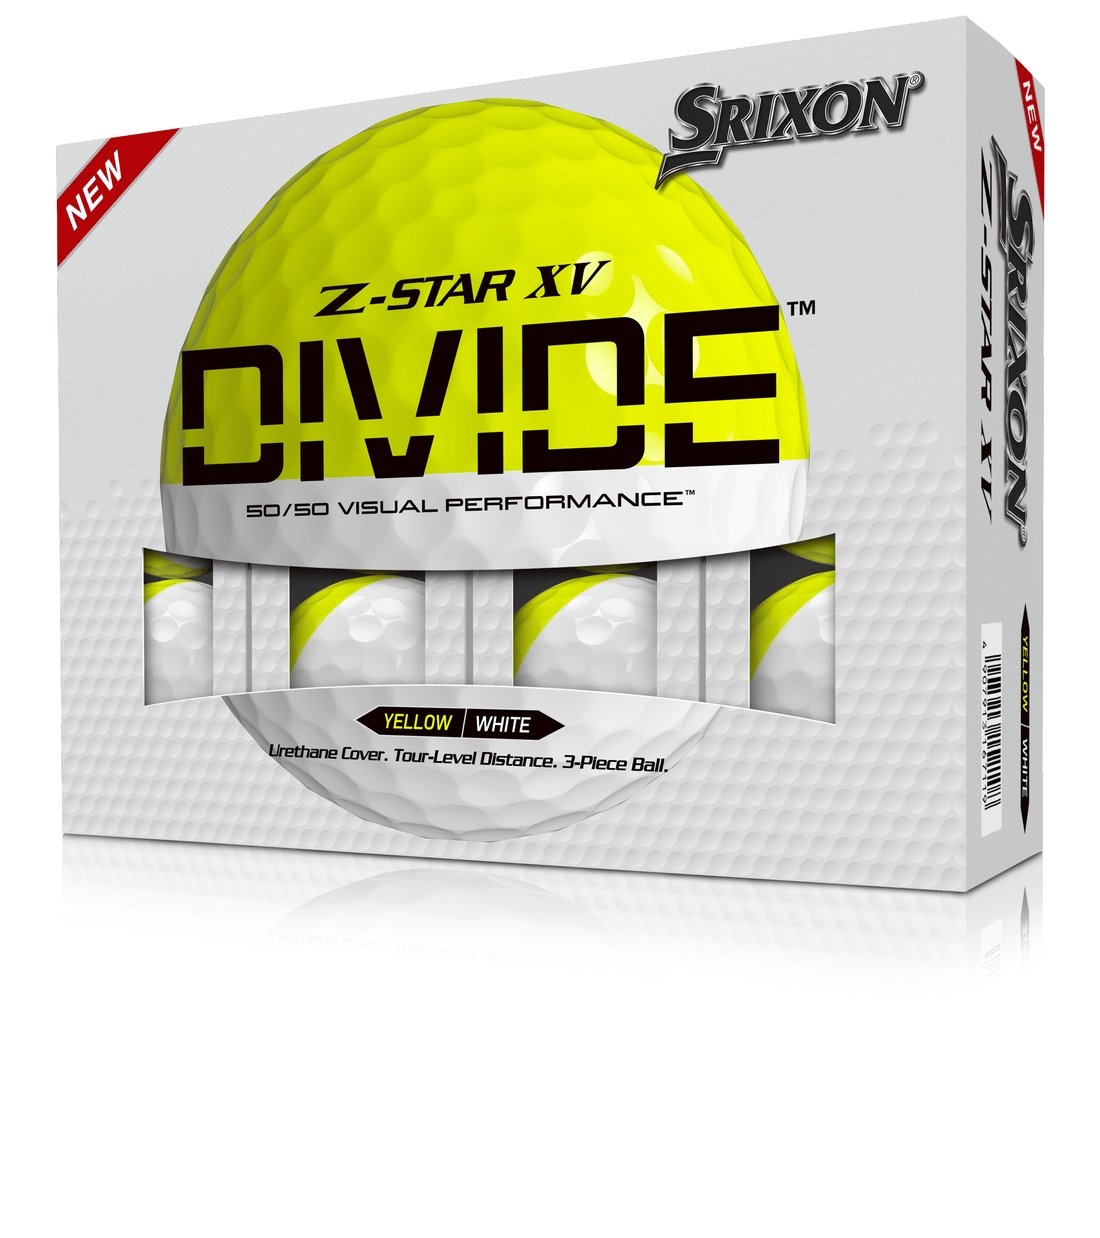 Srixon Z-Star XV Golf Balls - Divide 2023